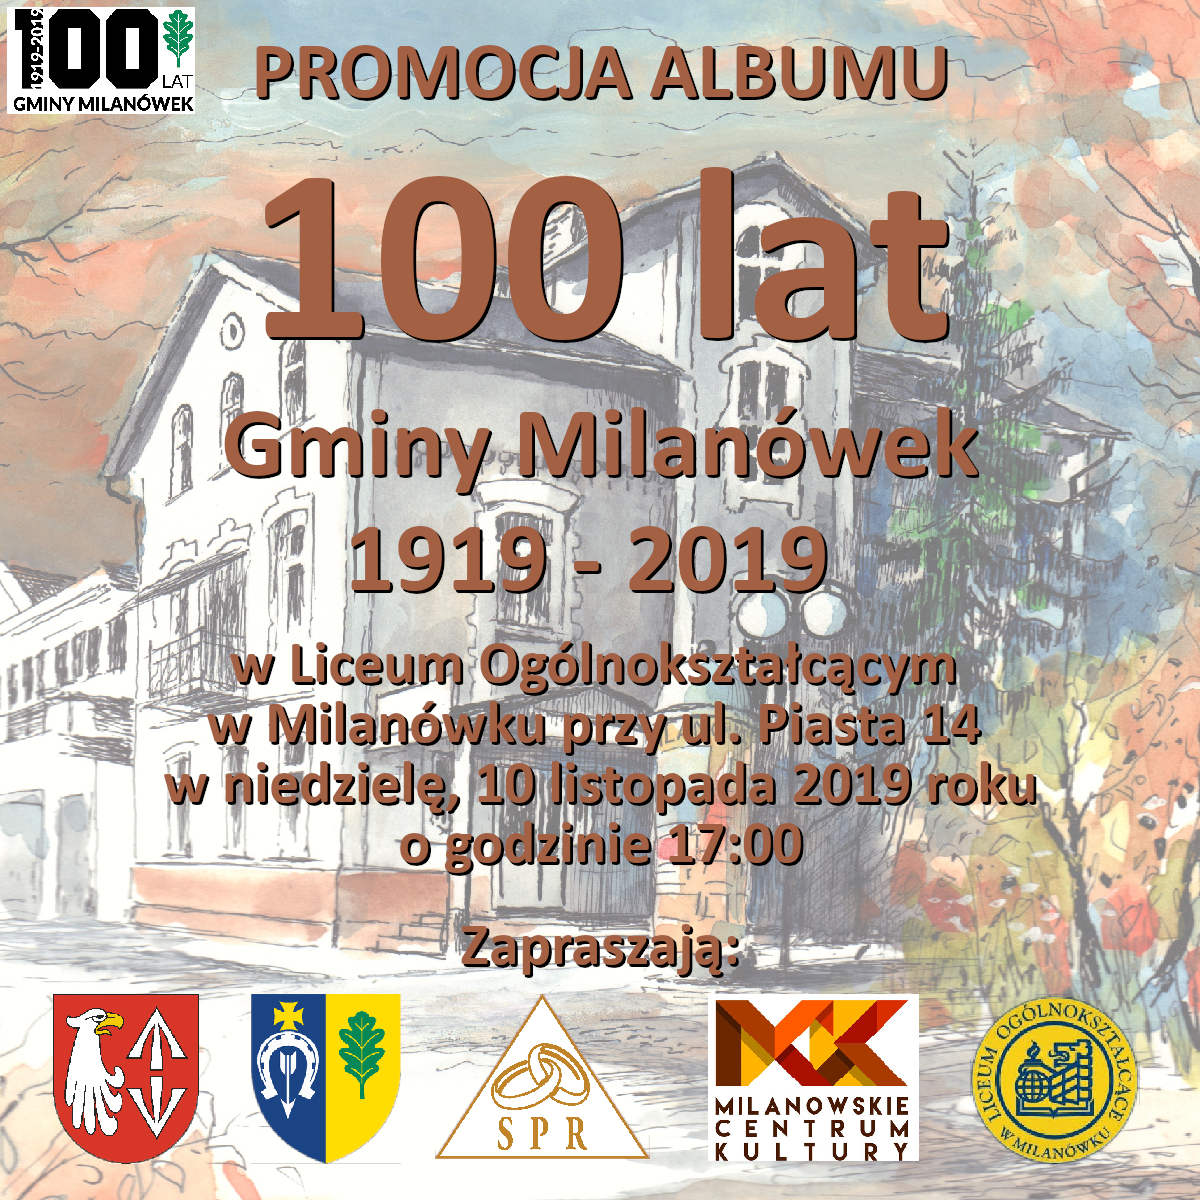 Plakat promujący albumu "100 lat Gminy Milanówek 1919-2019"